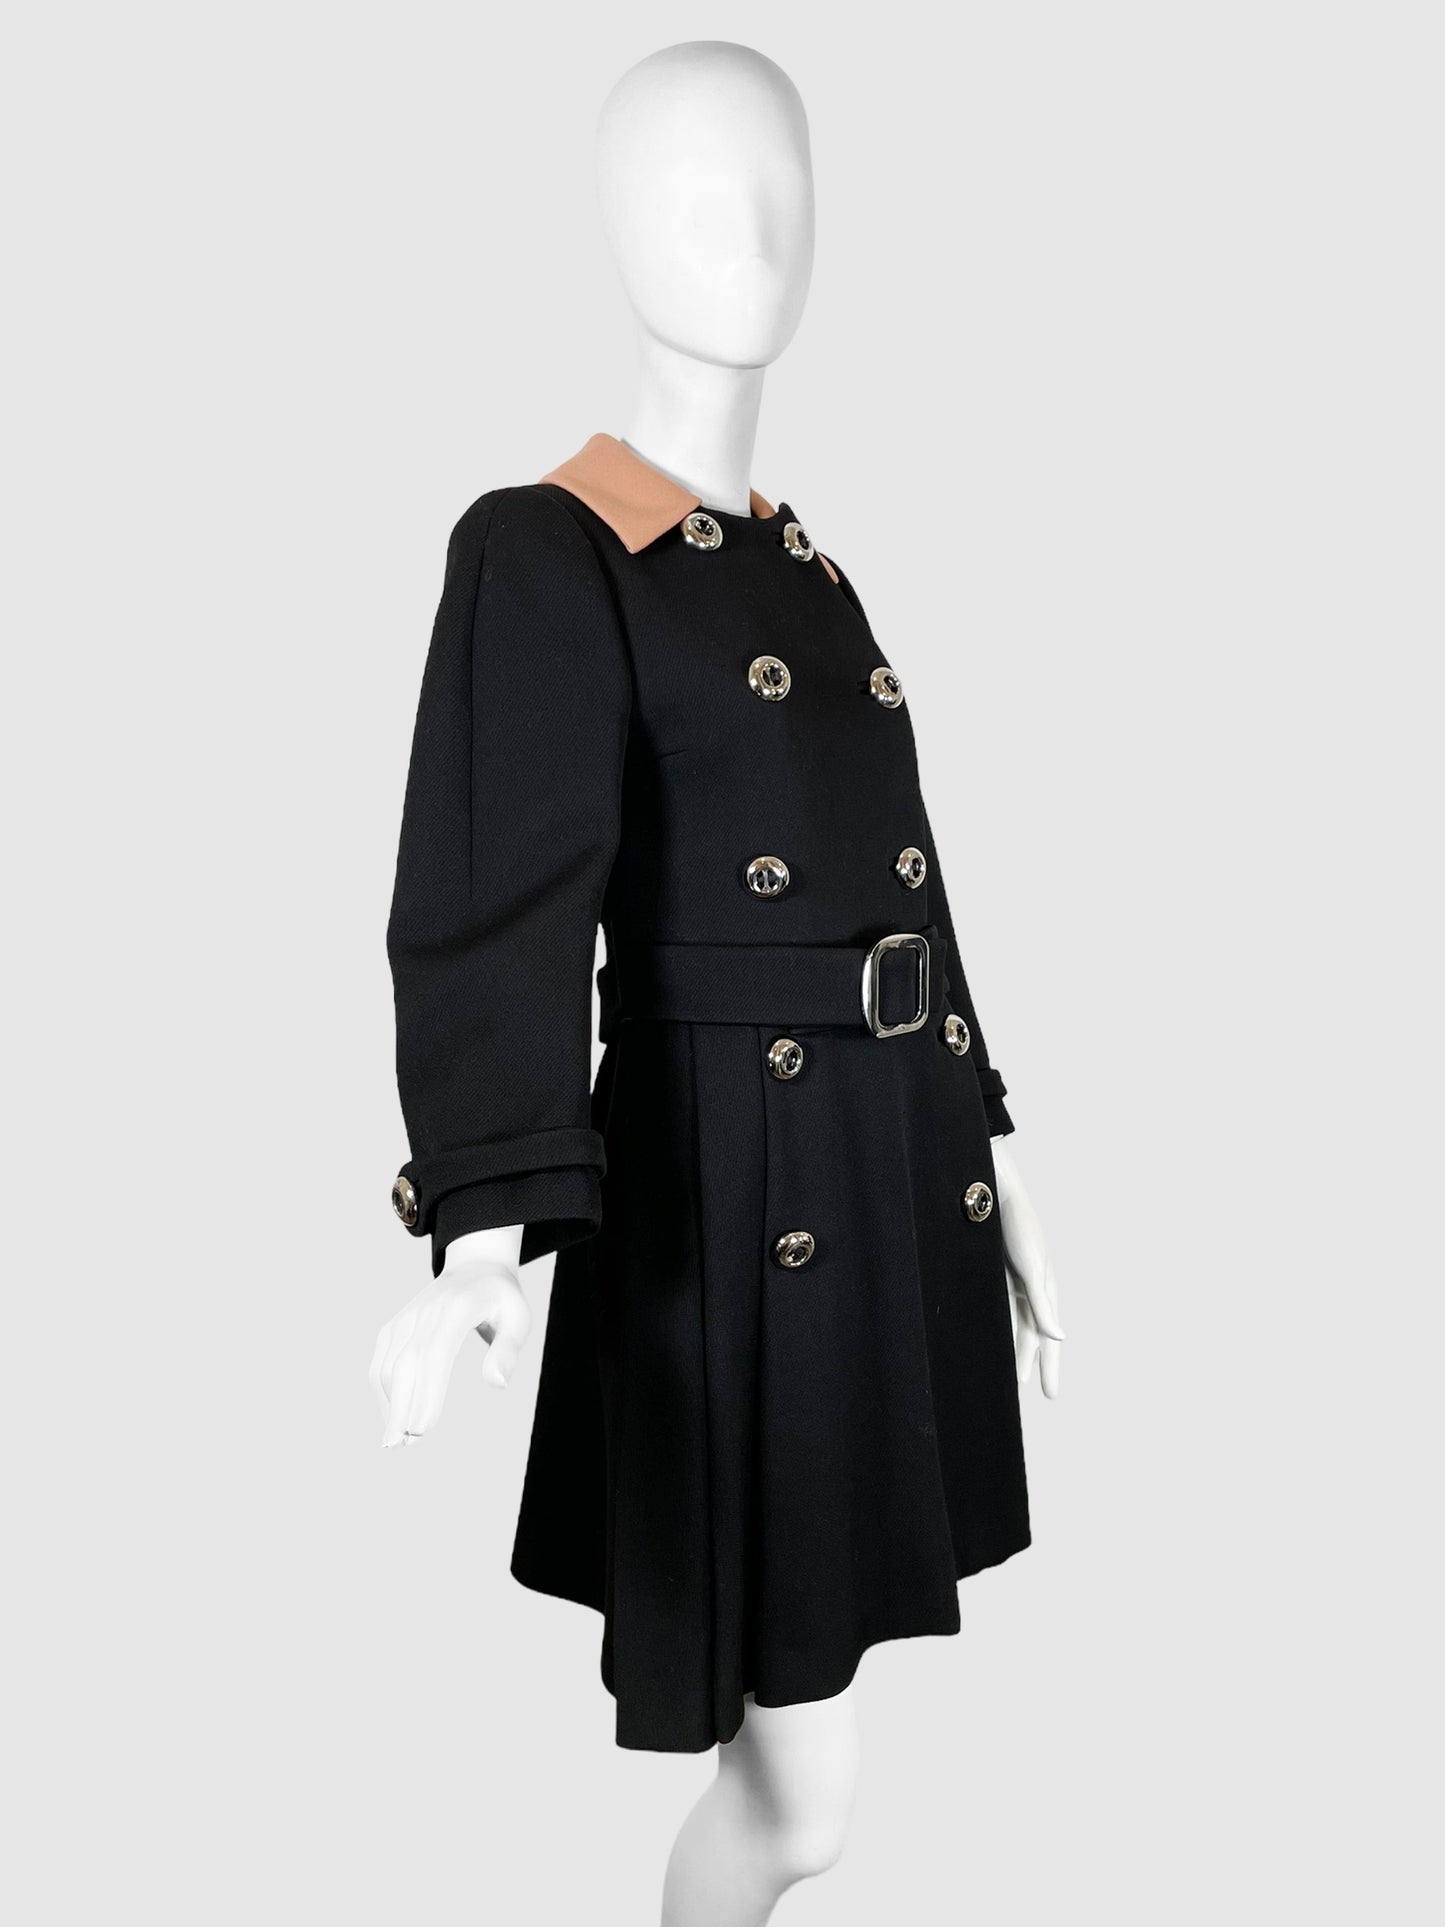 Prada Wool Double-Breasted Coat - Size 40